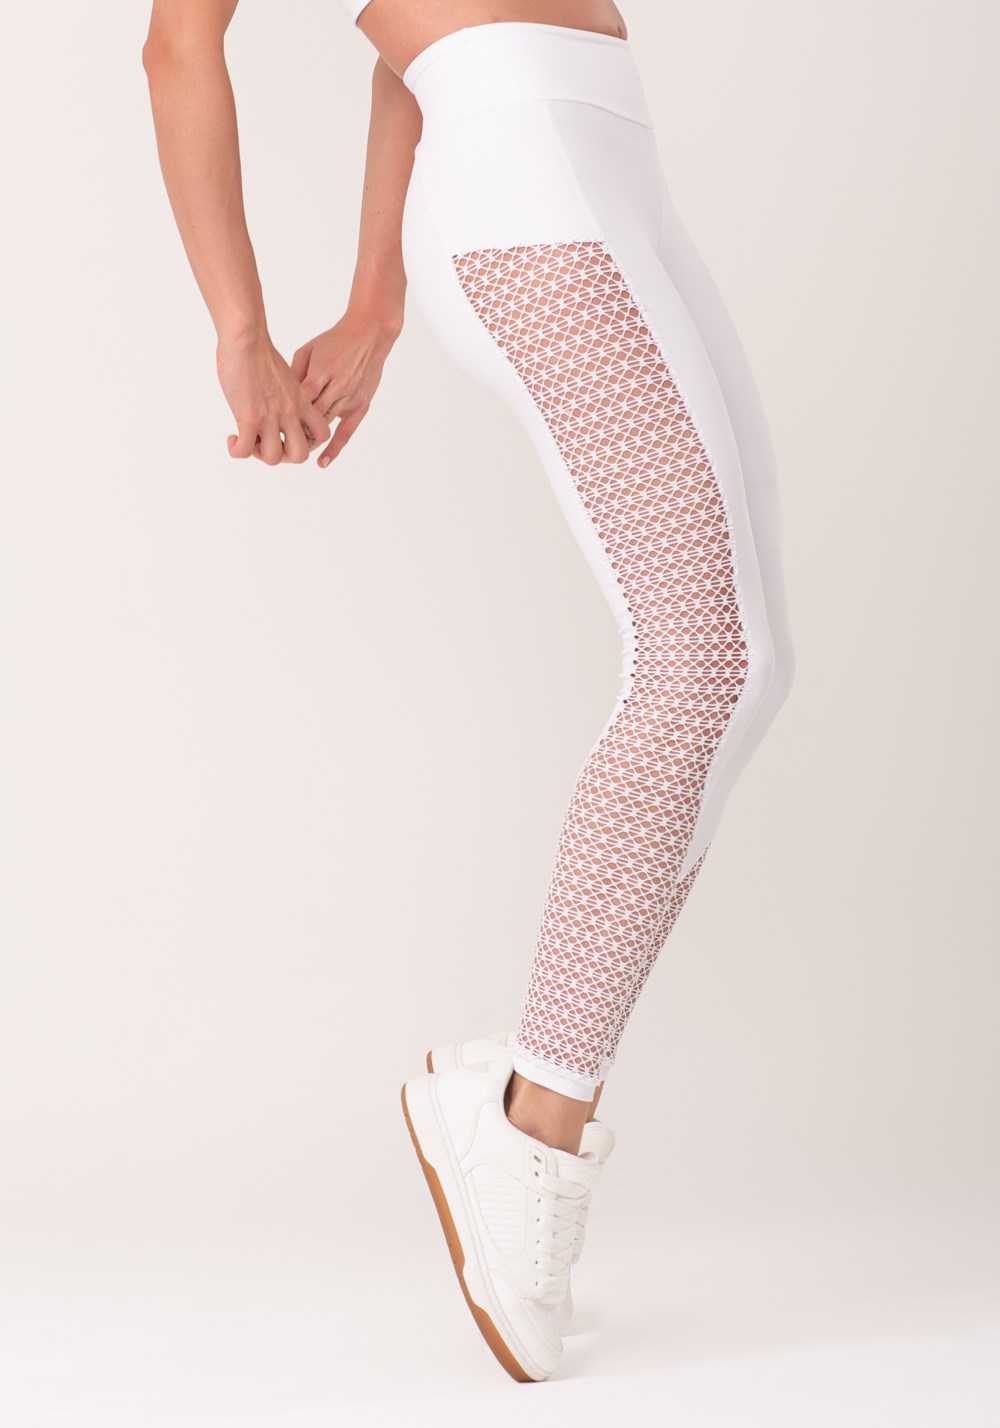 Legging fitness feminina branco com recortes lateral em tela new age